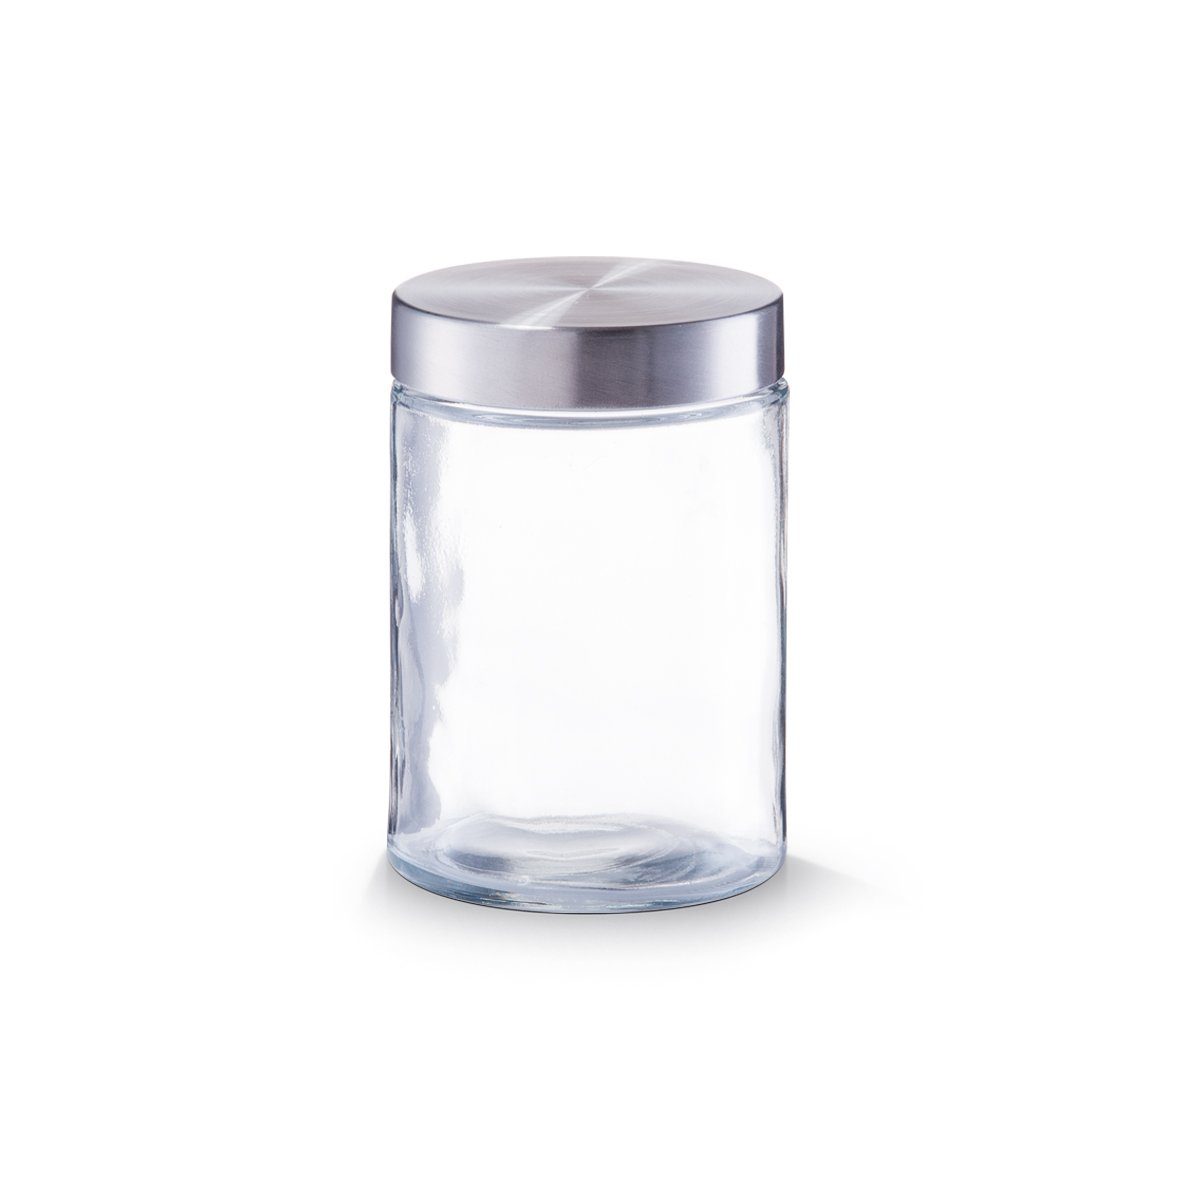 Present Zeller 1100 transparent, x m. Glas/Edelstahl, 1160 ml, ml, cm Vorratsglas 16,5 Glas/Edelstahl, Ø11 Vorratsglas Edelstahldeckel,